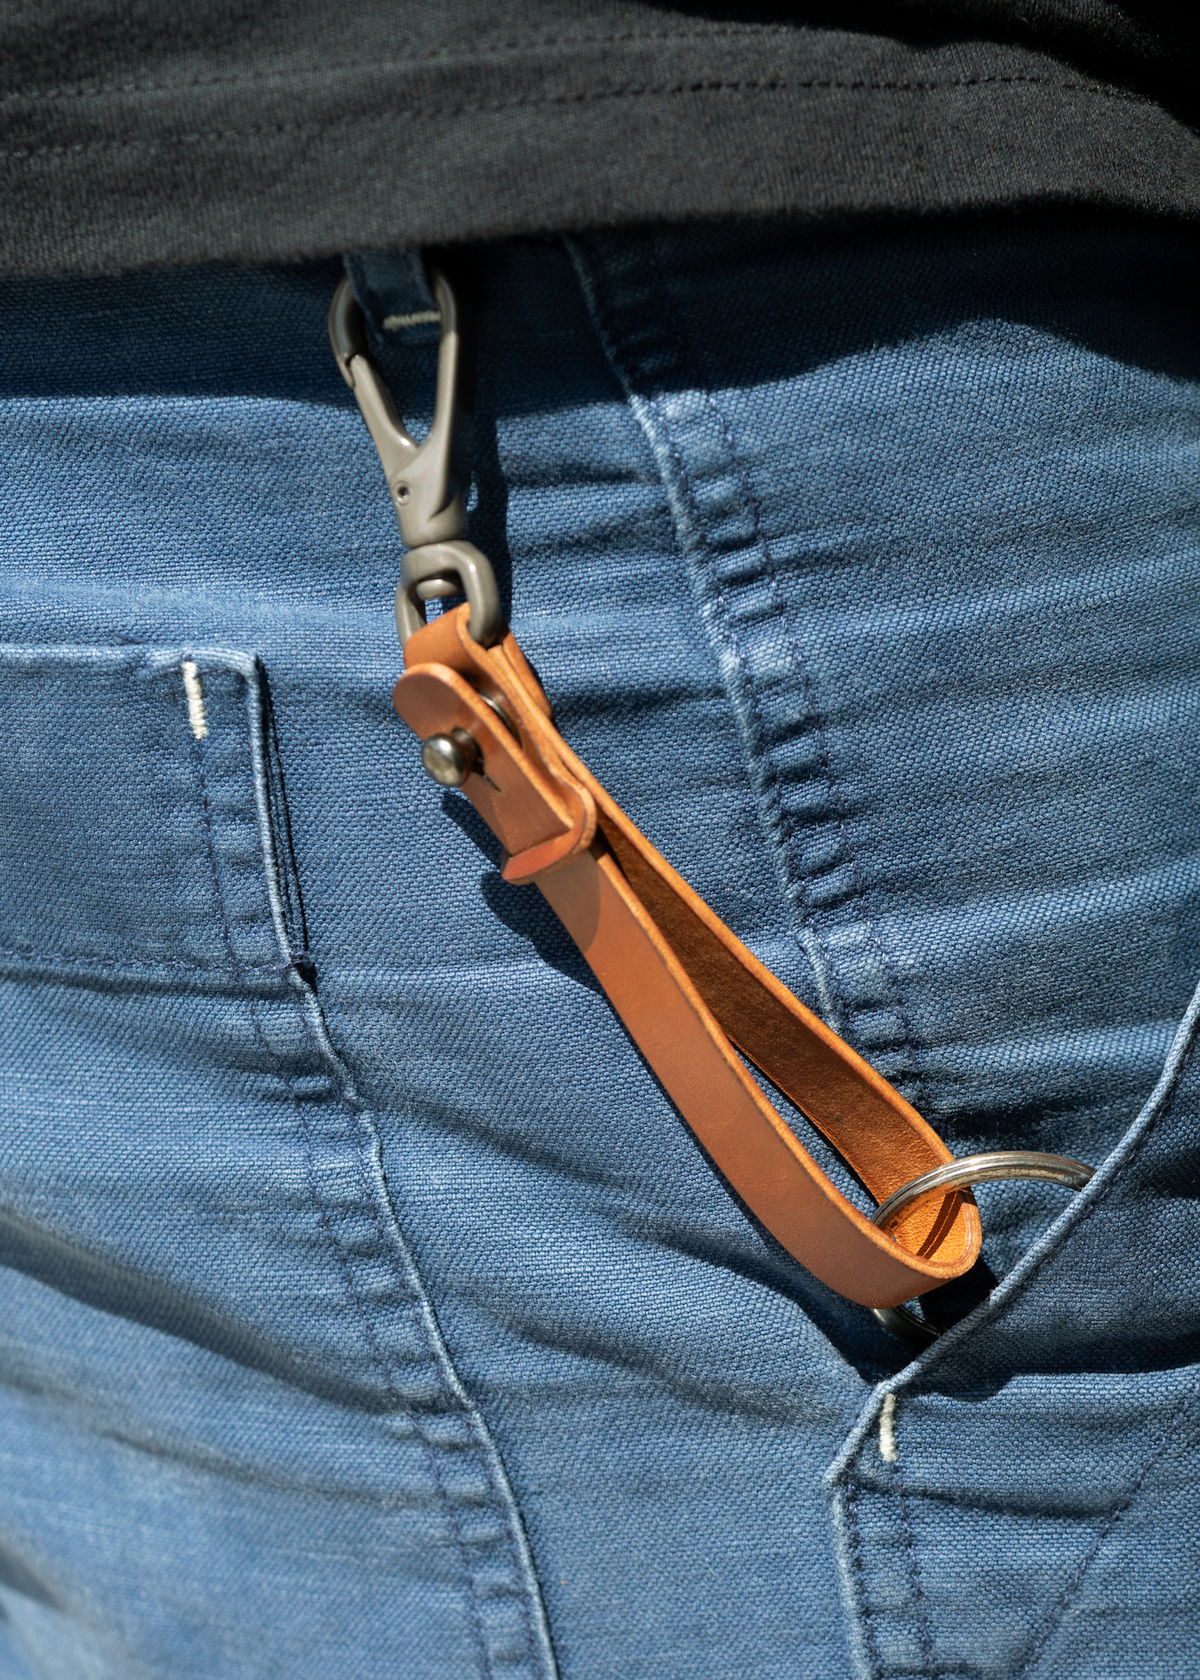 Whis-Key-Hook Carabiner Key Chain